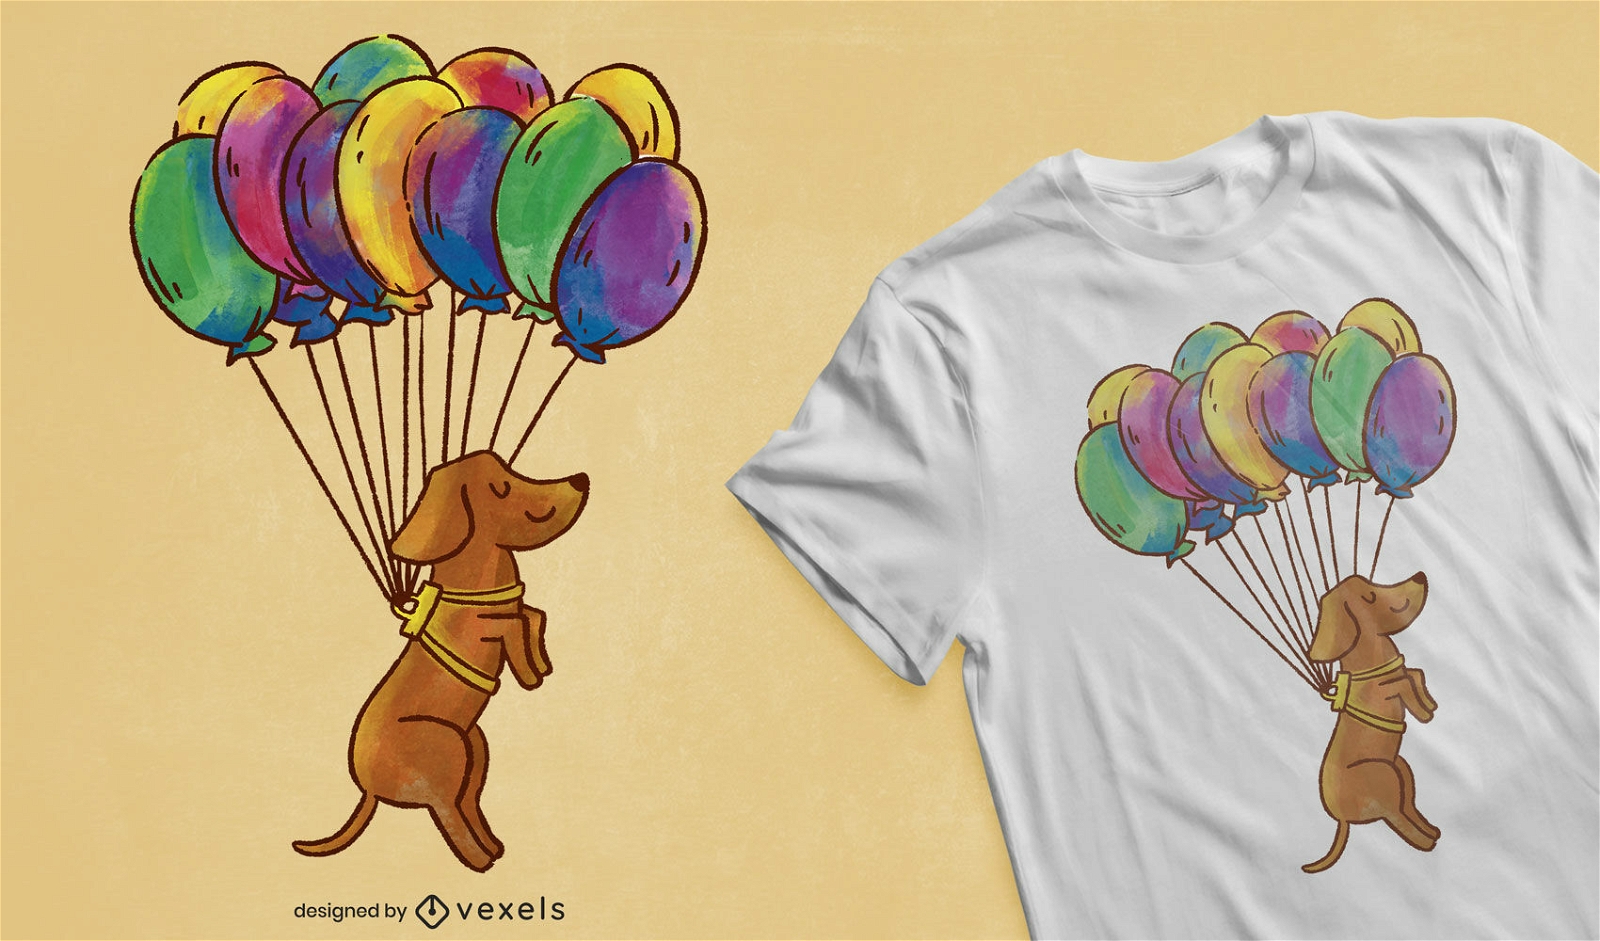 Dachshund dog balloons t-shirt design